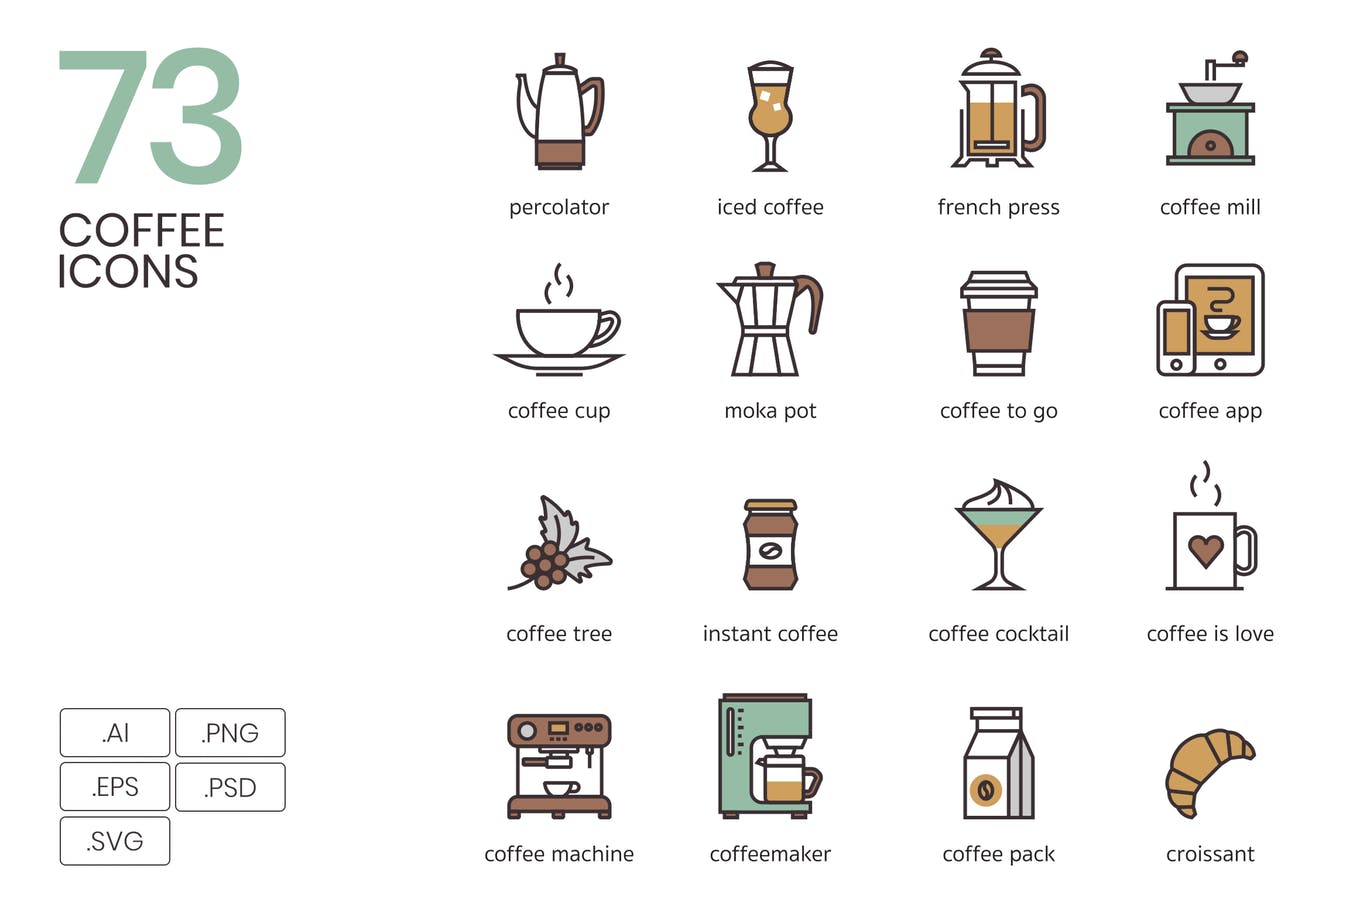 Modern coffee icons